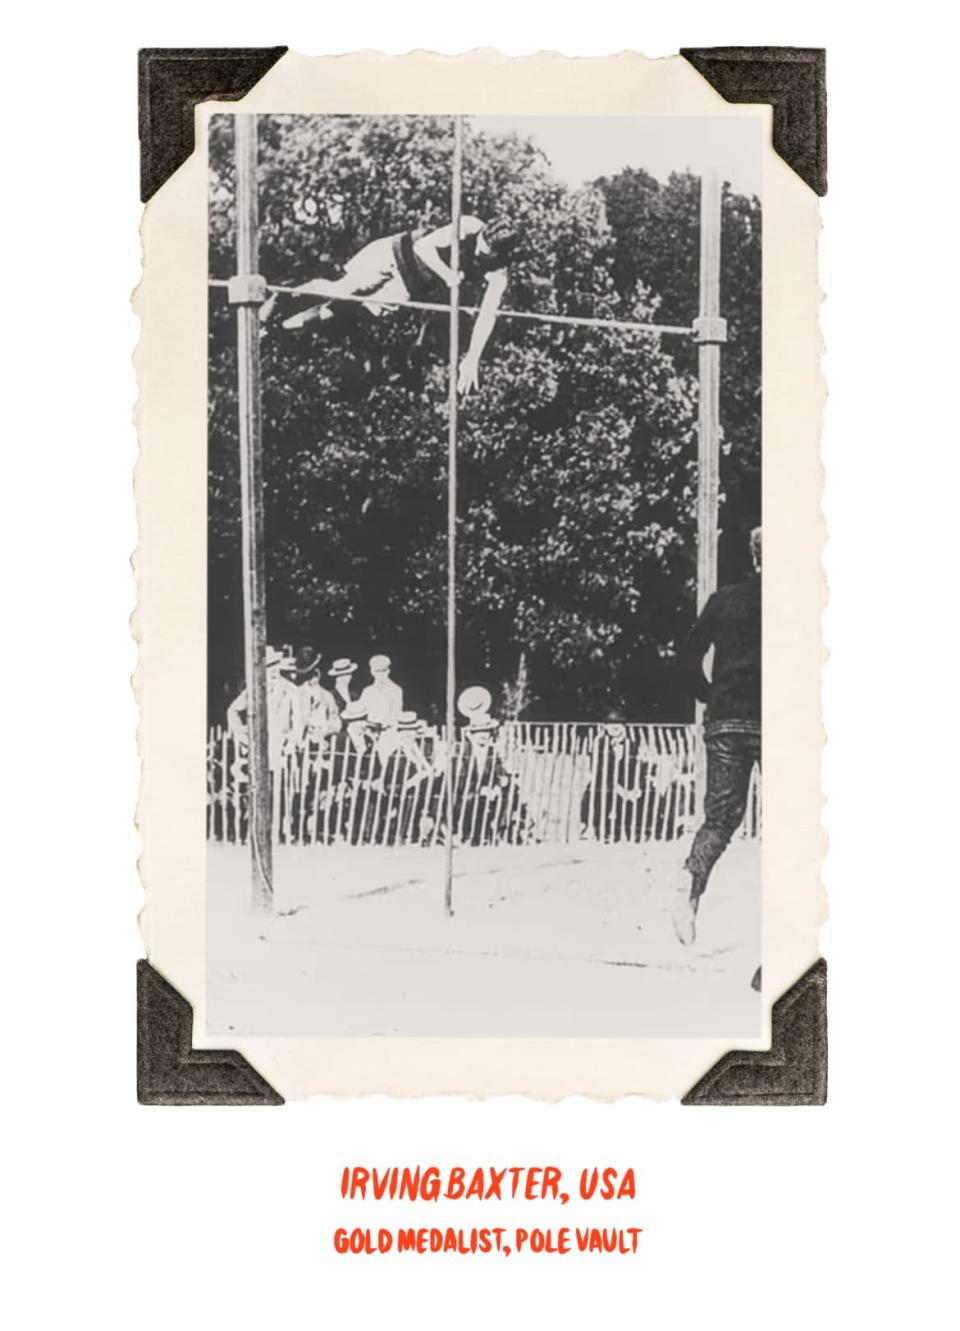 Pole vaulting at the 1900 Paris Olympics